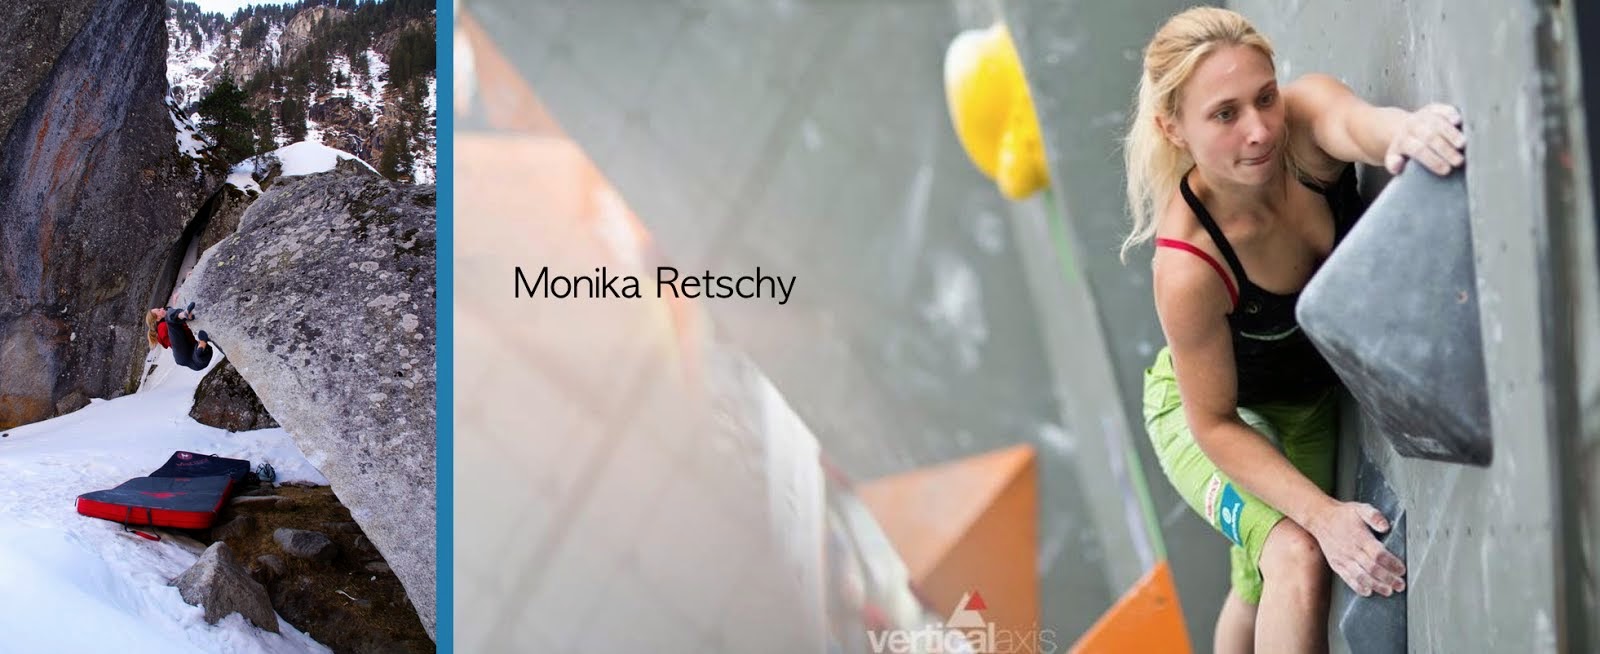 Monika Retschy